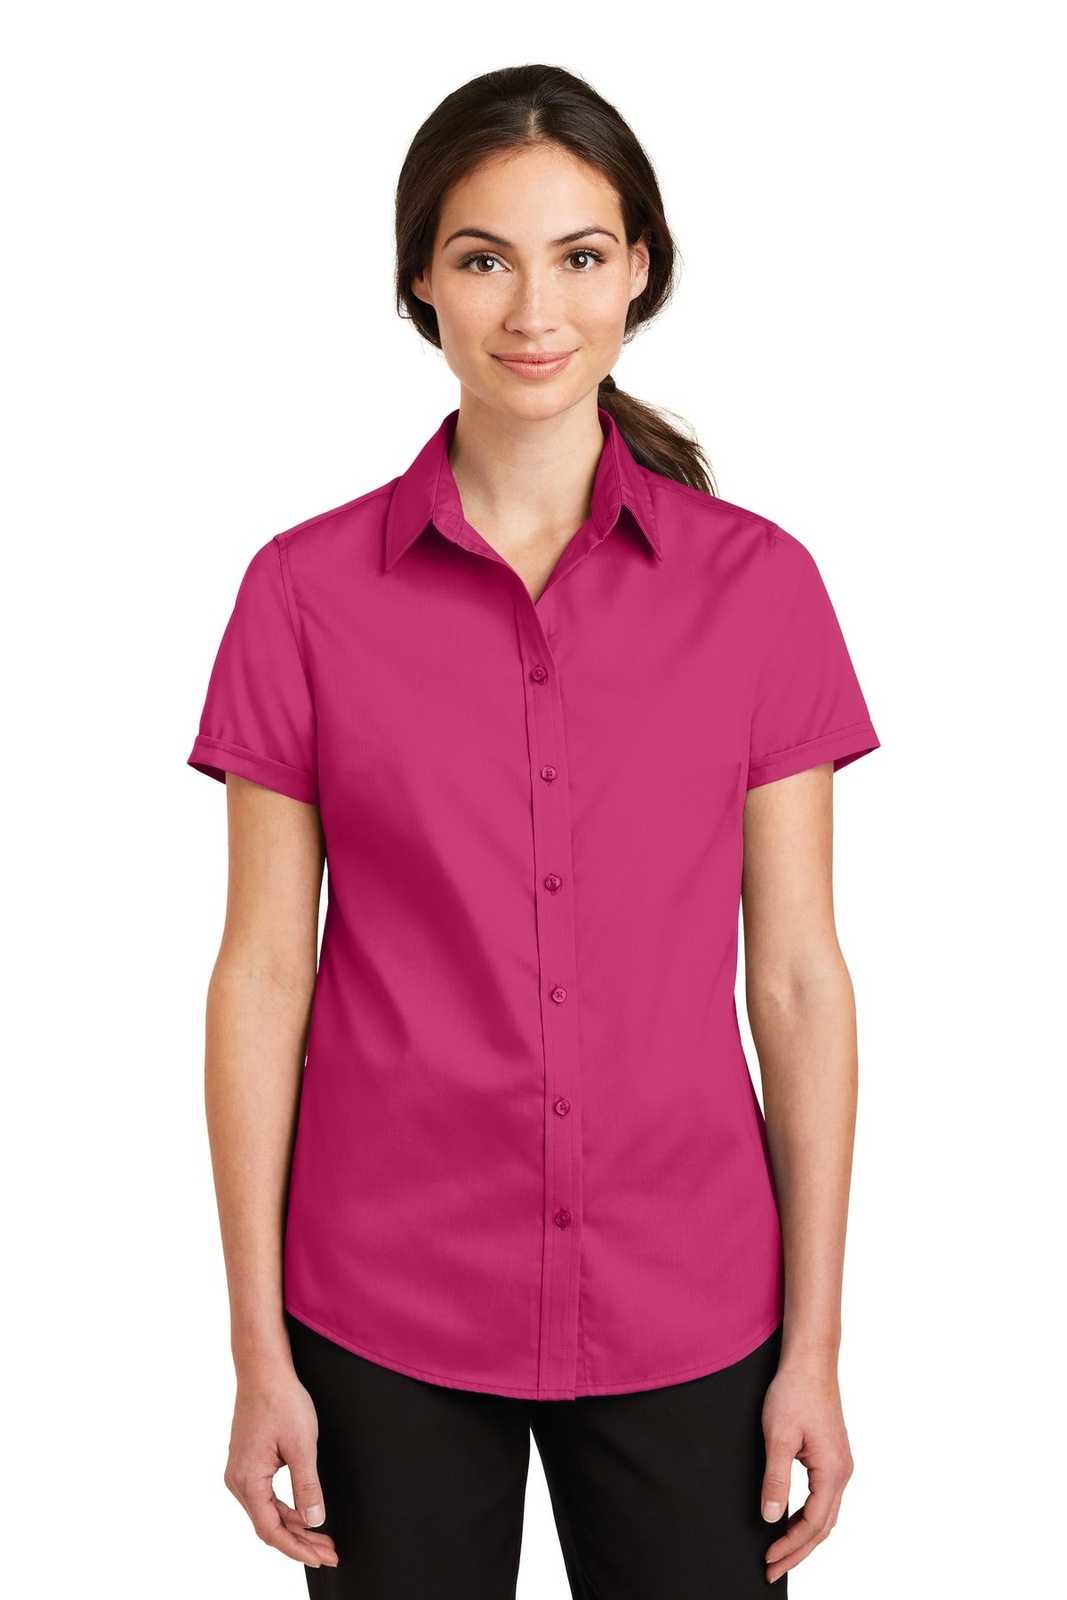 Port Authority L664 Ladies Short Sleeve Superpro Twill Shirt - Pink Azalea - HIT a Double - 1